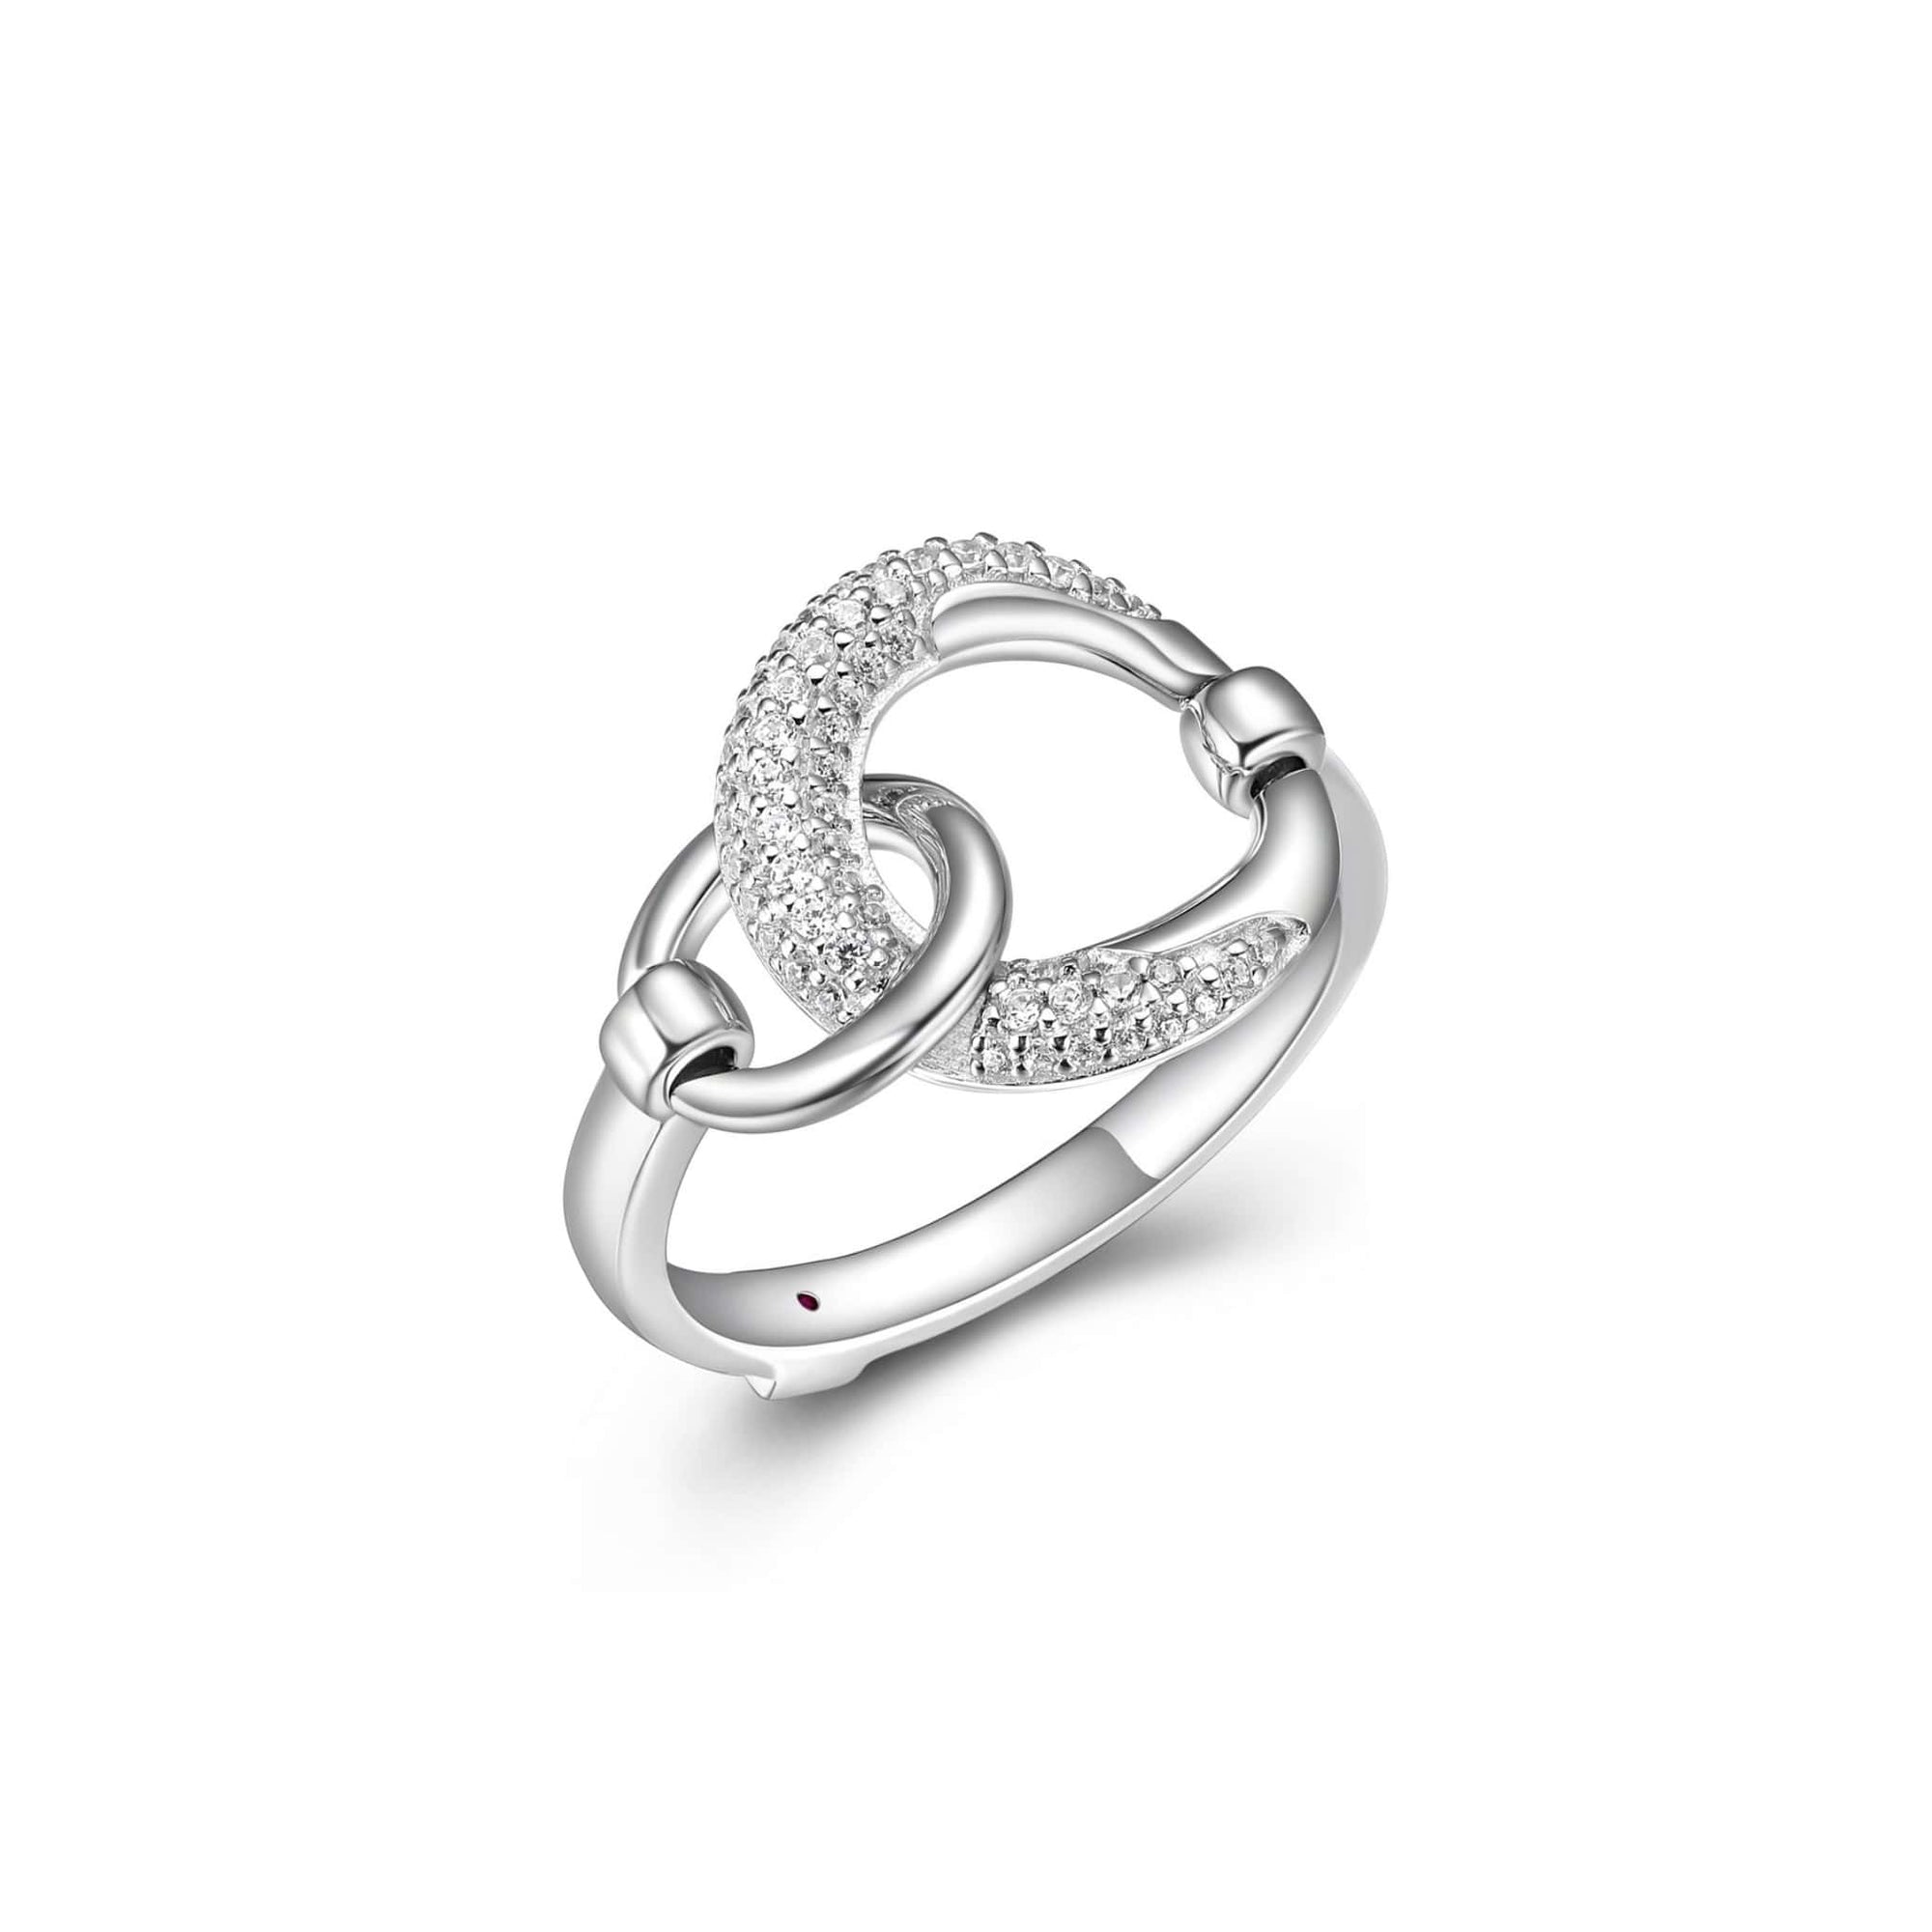 ELLE "Caramel" Interlocking Silver Ring at Arman's Jewellers Kitchener